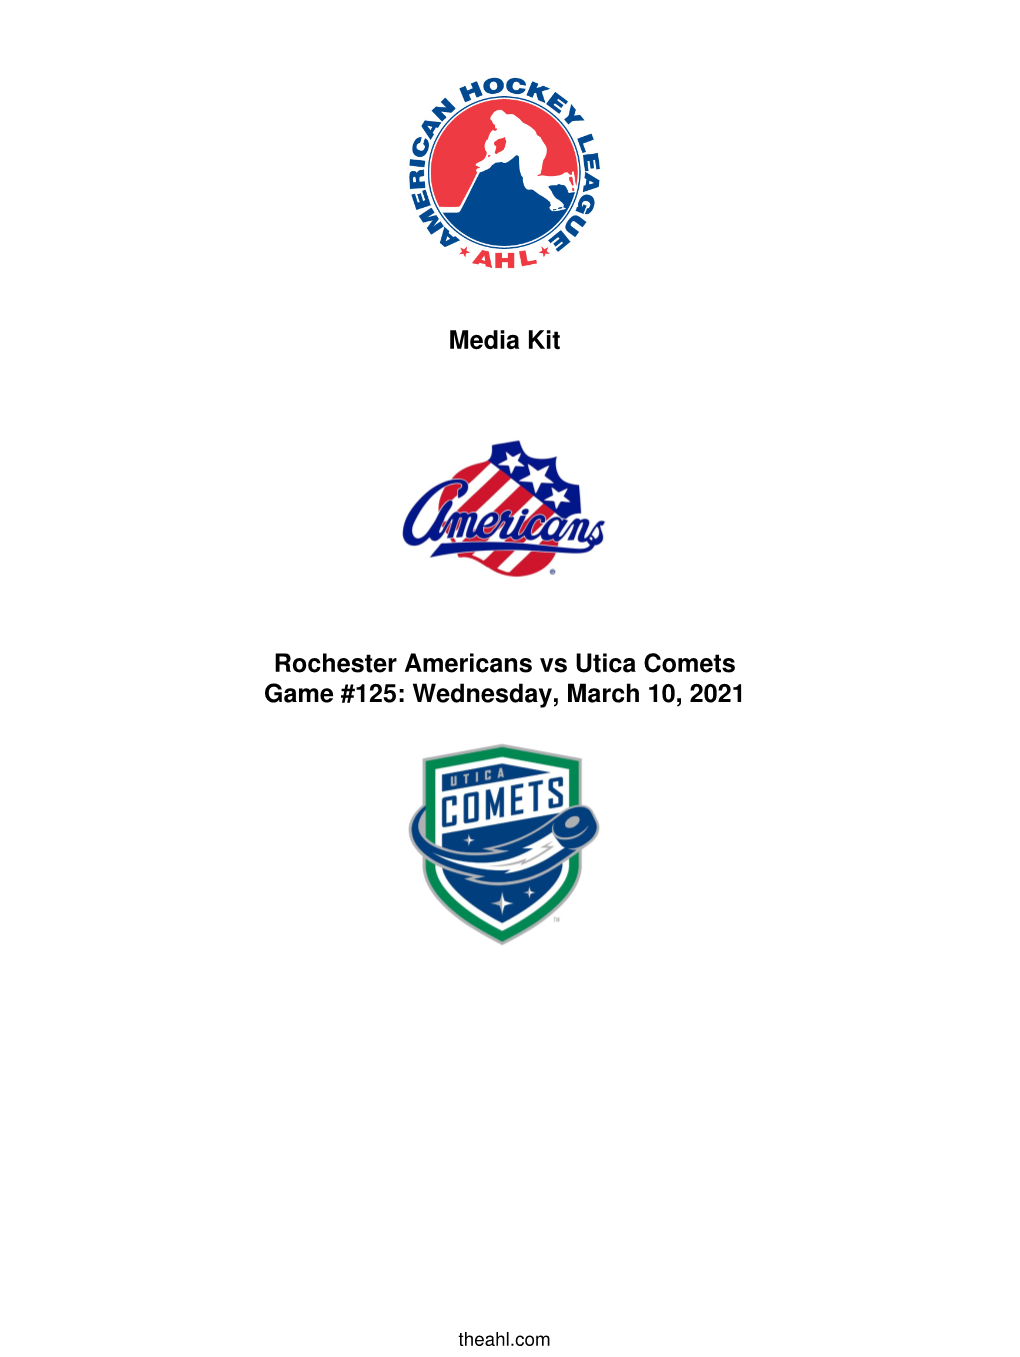 Media Kit Rochester Americans Vs Utica Comets Game #125